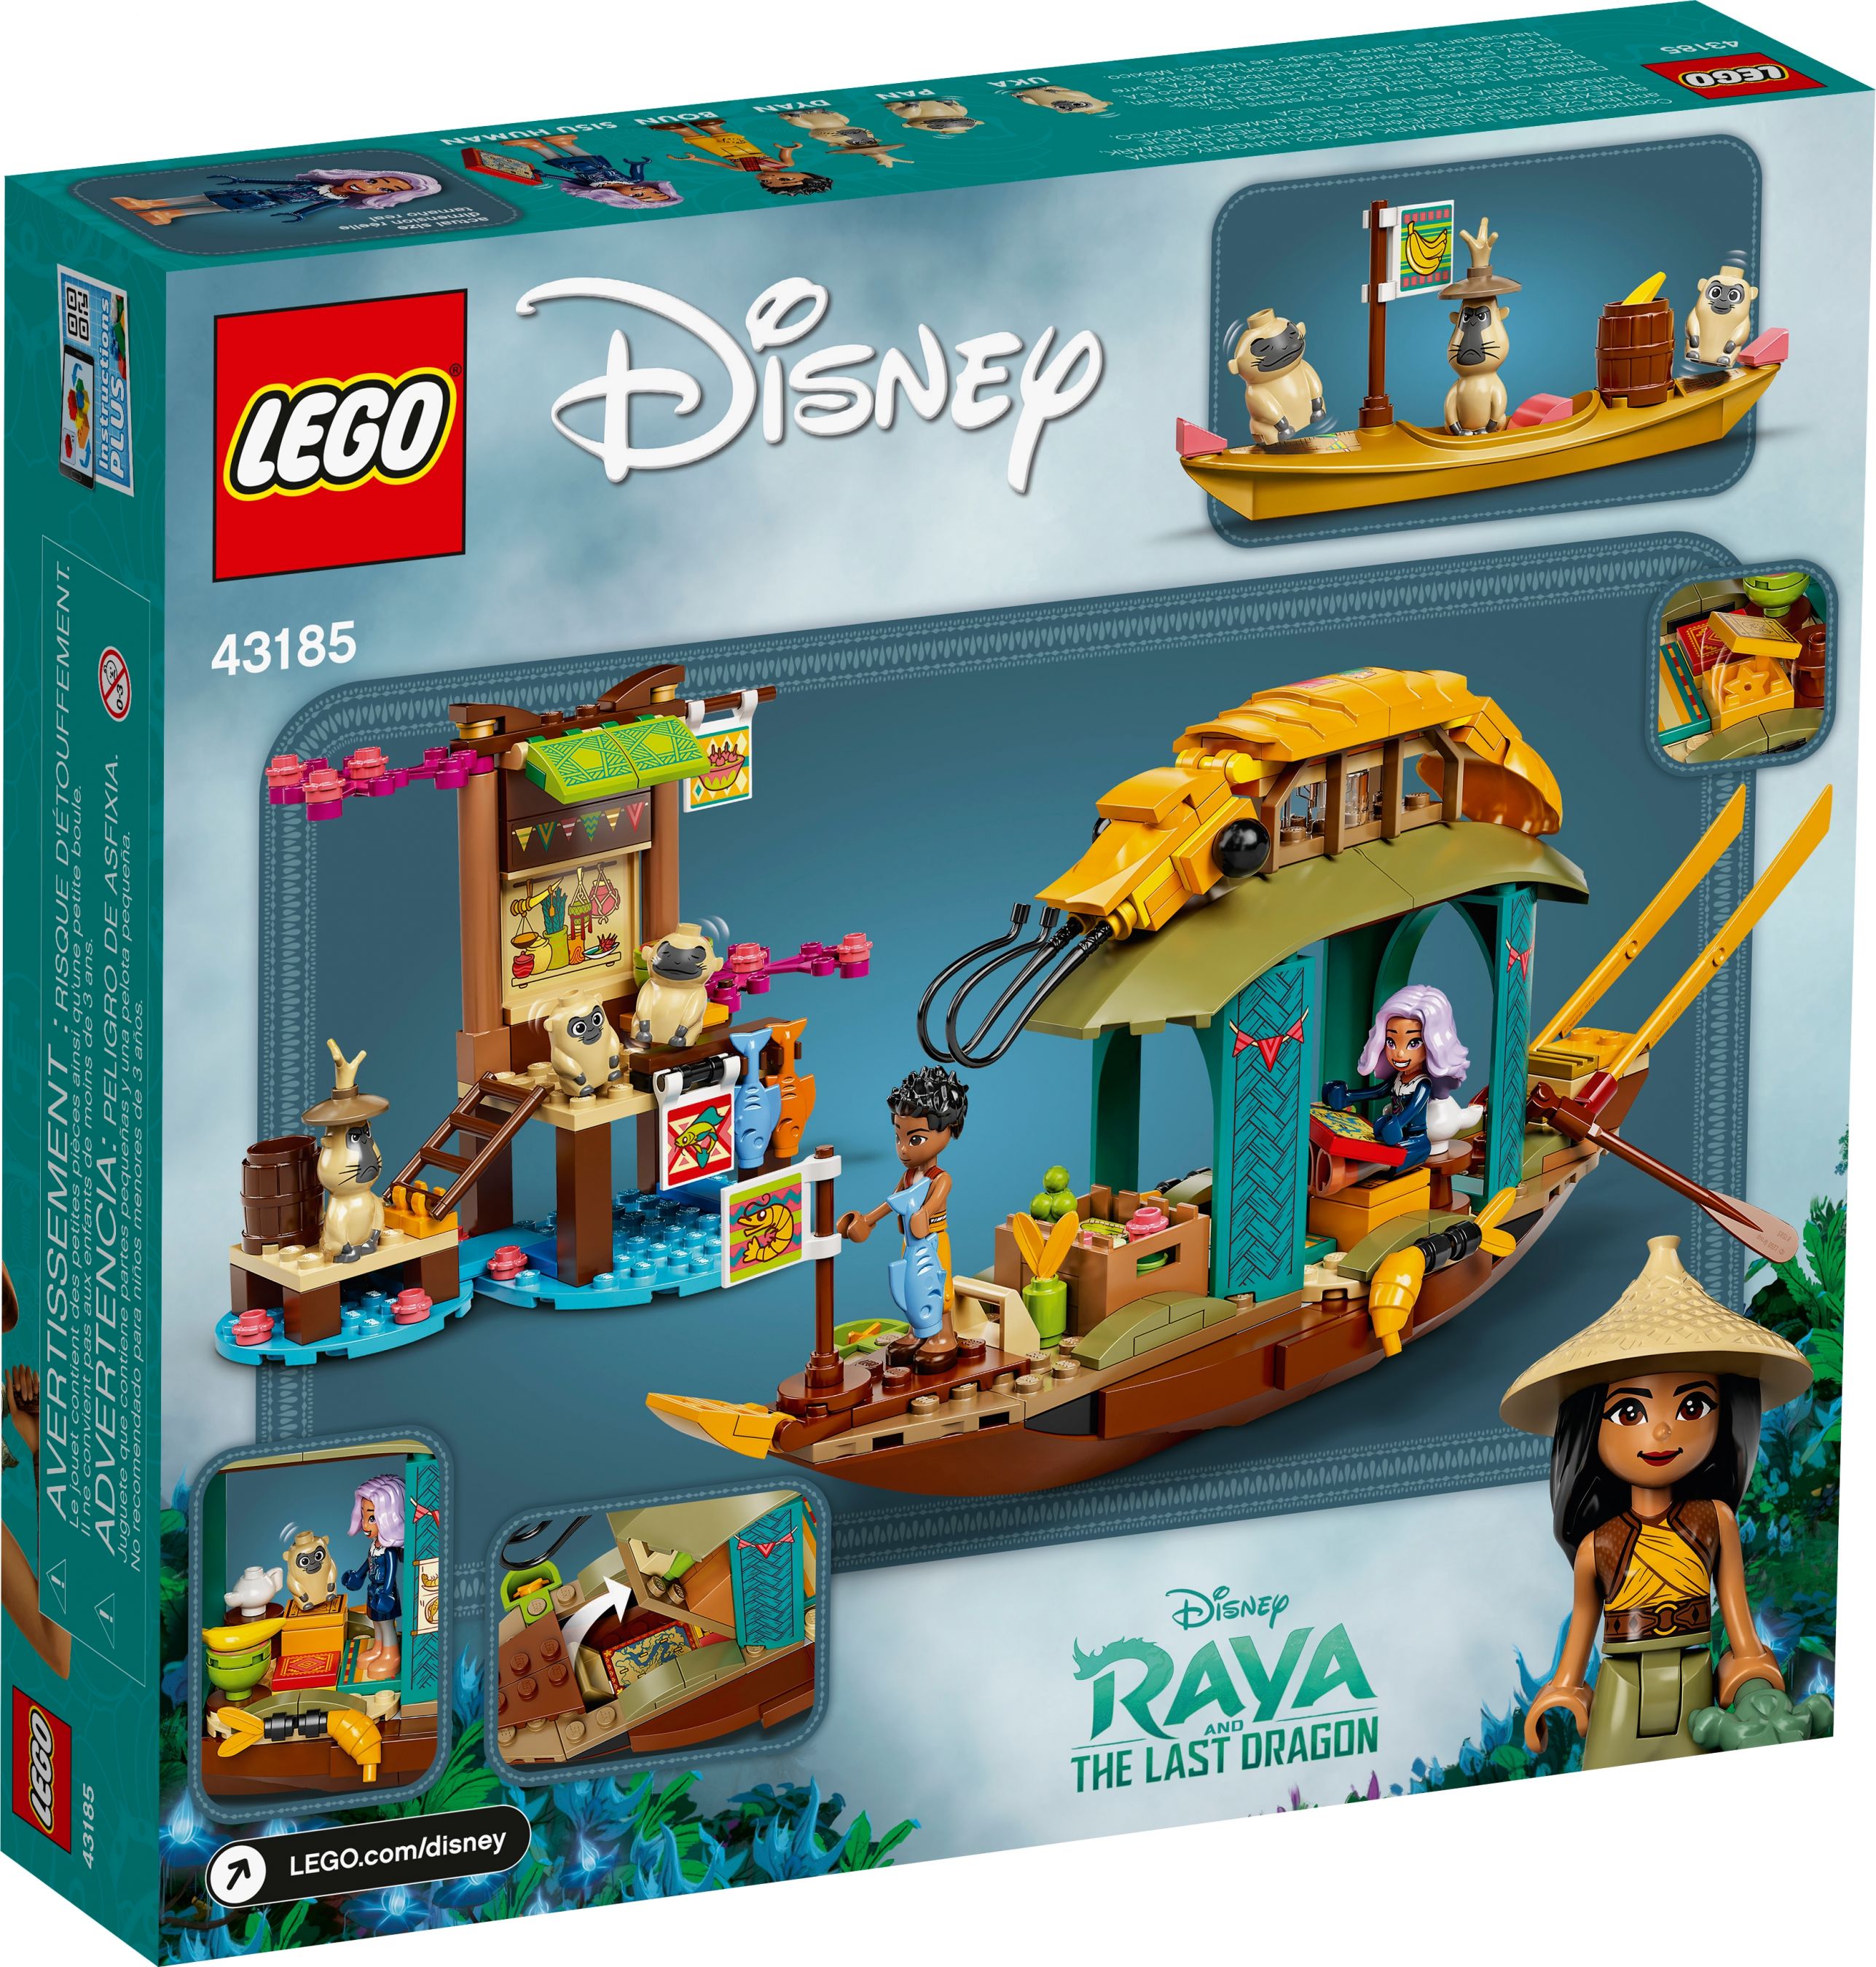 LEGO Disney 43185 Bouns Boot LEGO_43185_alt10.jpg